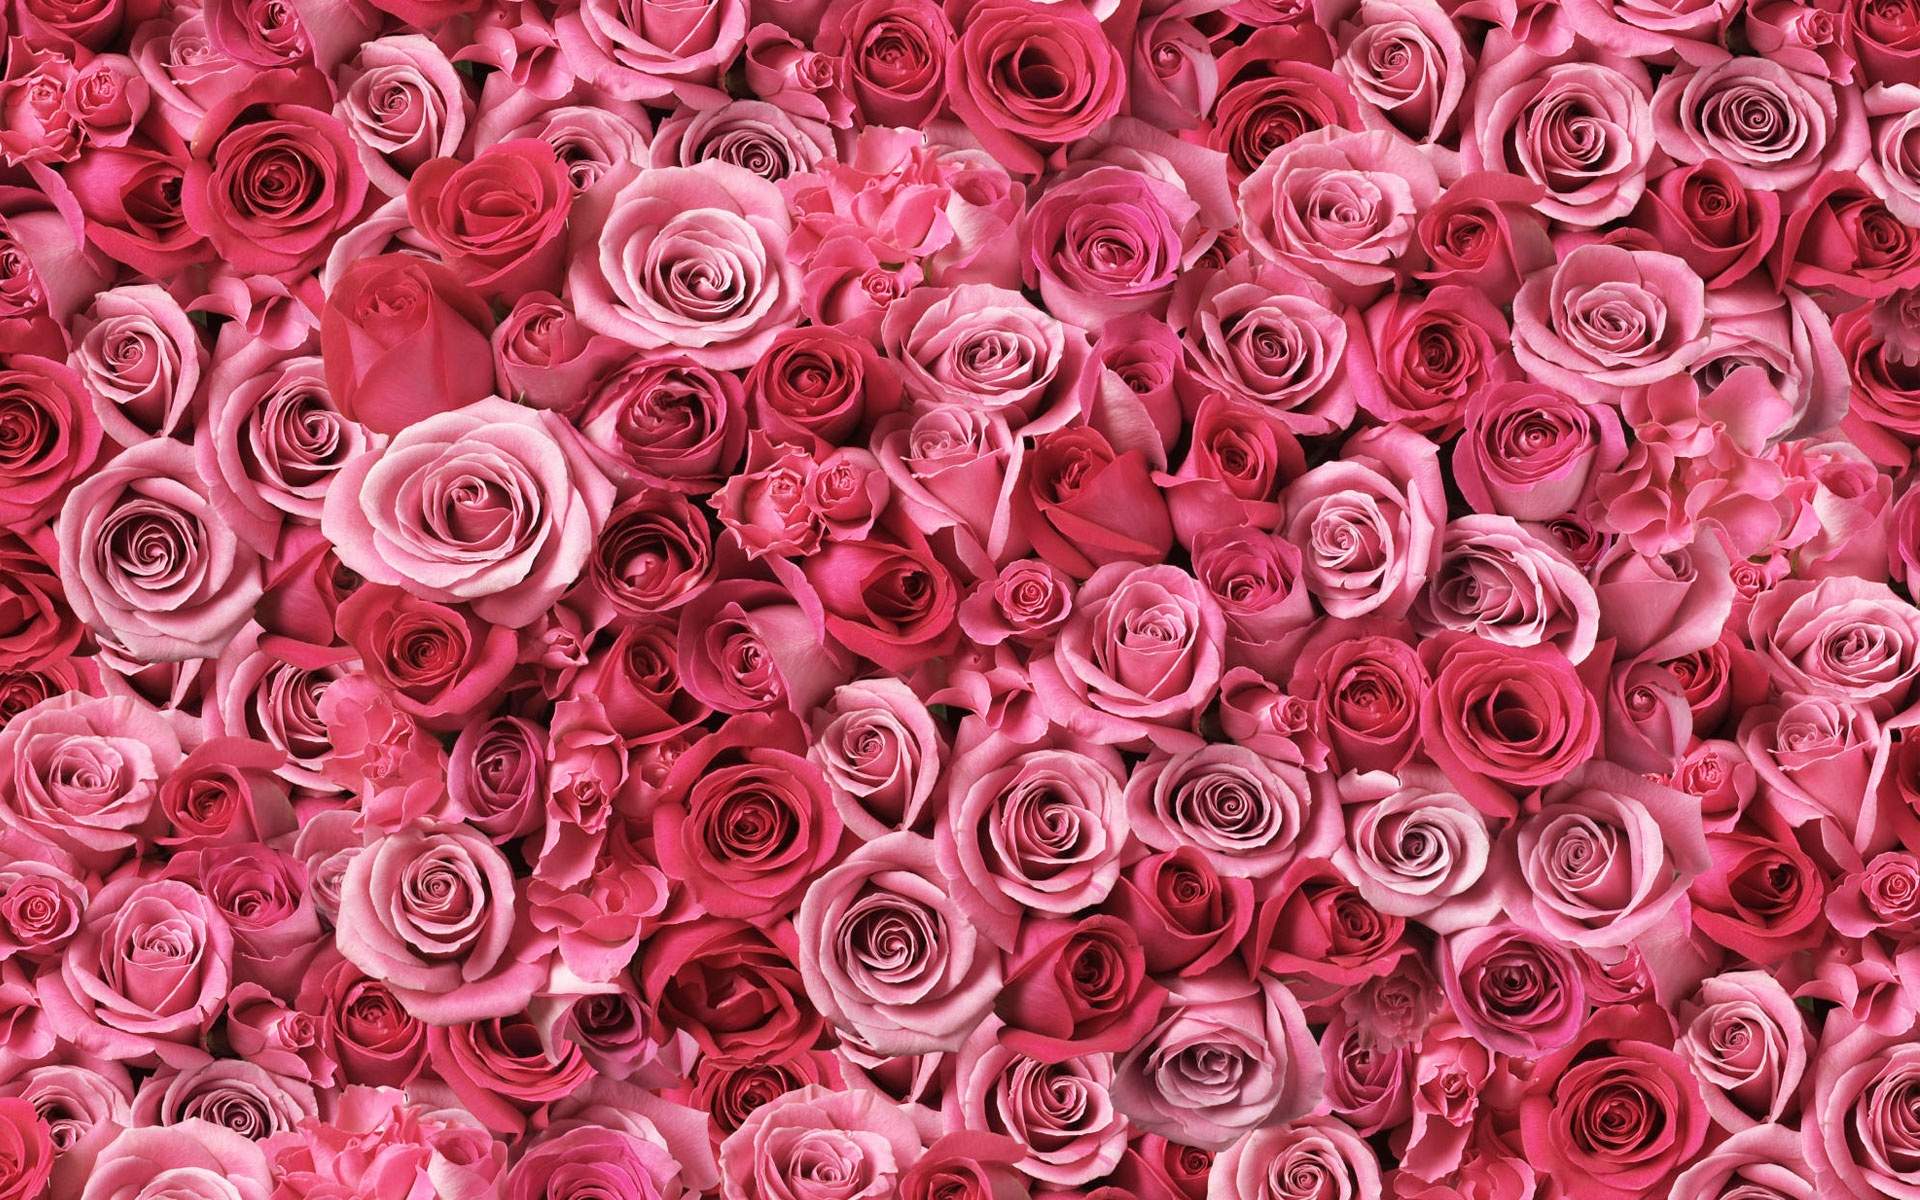 Pink Roses Wallpaper - Wallpaper, High Definition, High Quality, Widescreen